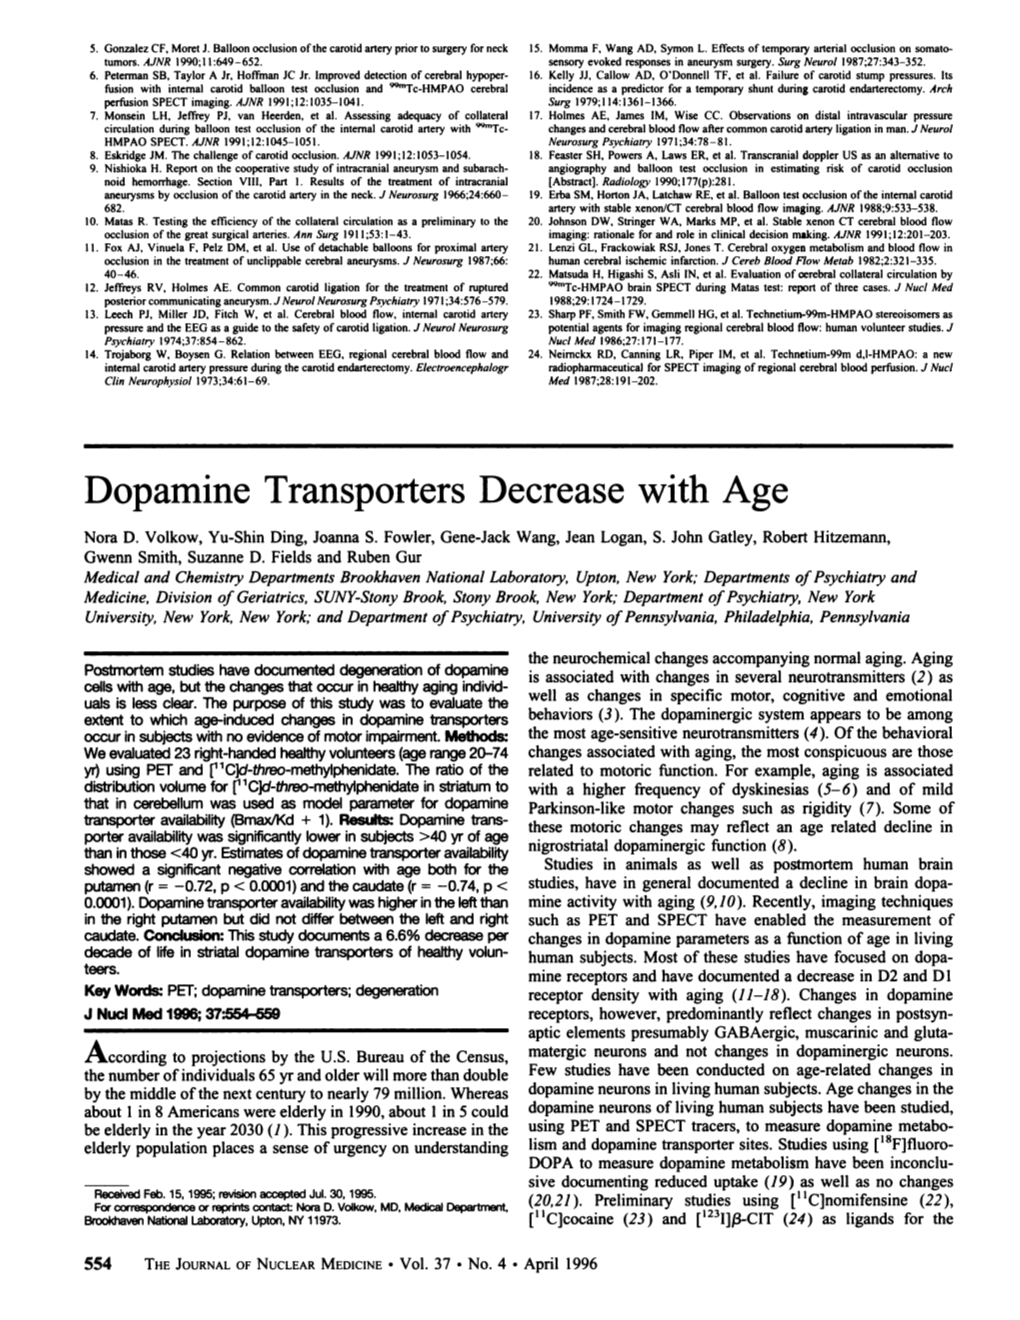 Dopamine Transporters Decrease with Age